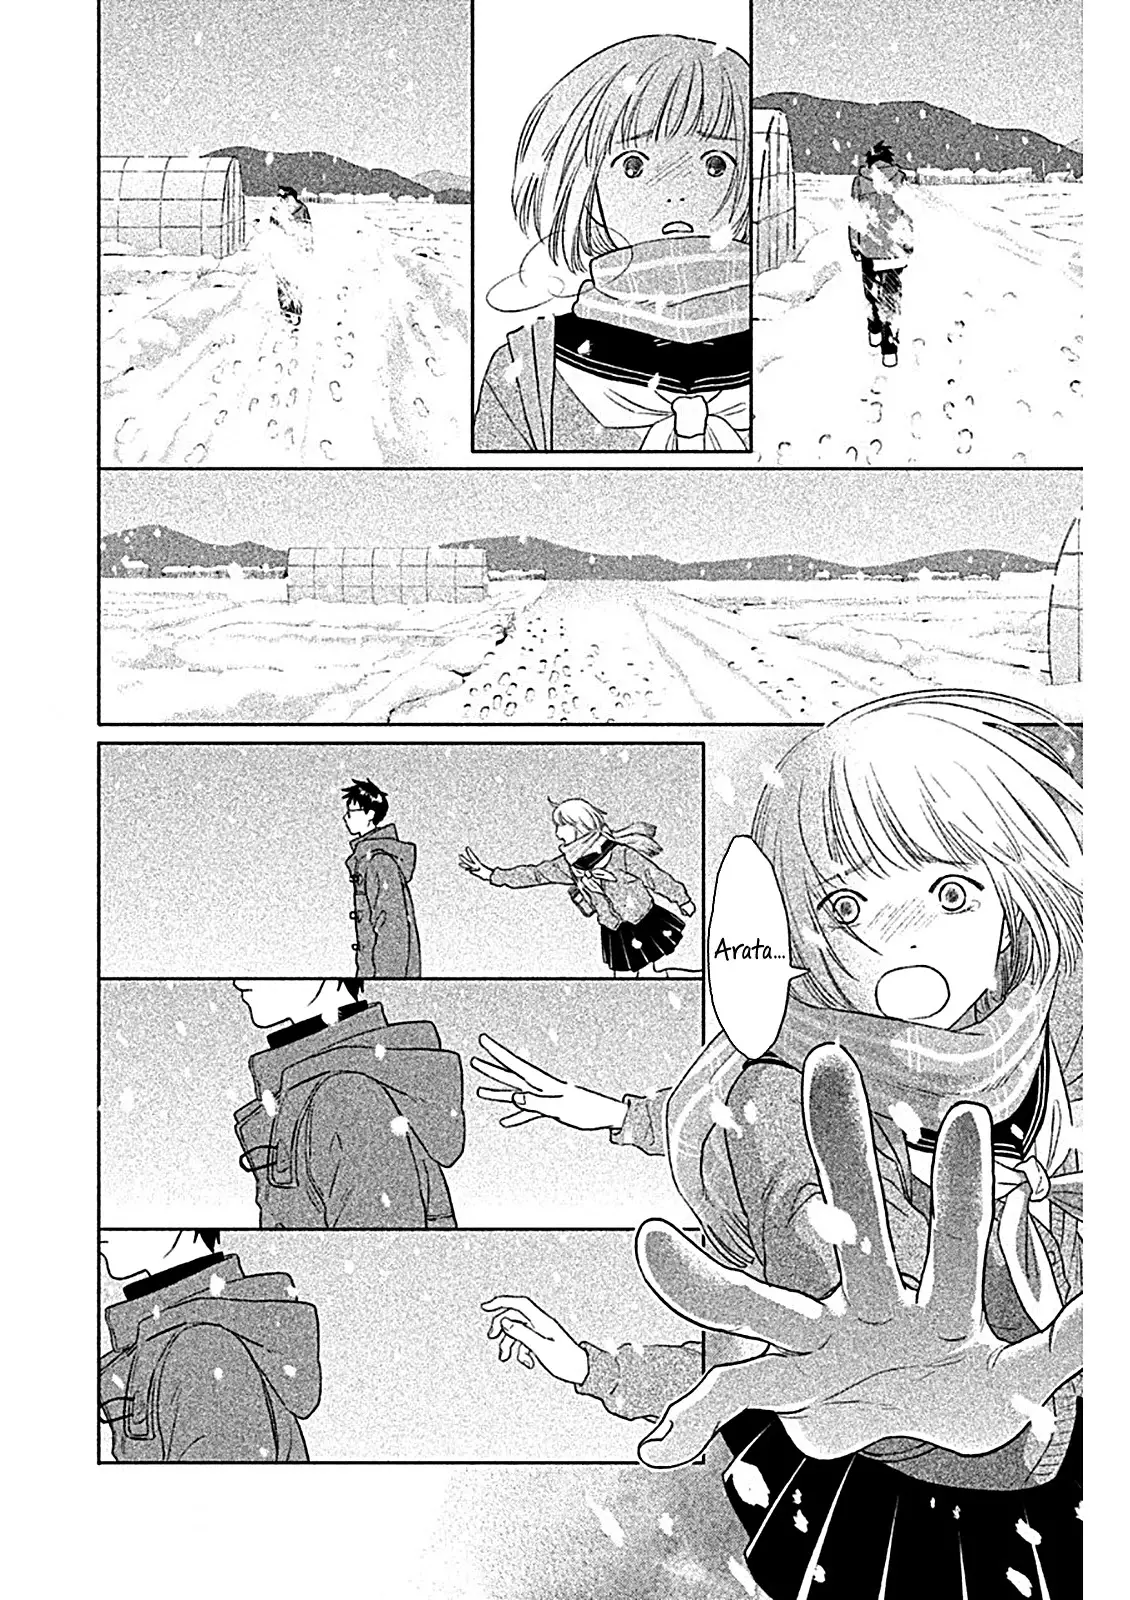 Chihayafuru: Middle School Arc - 8 page 26